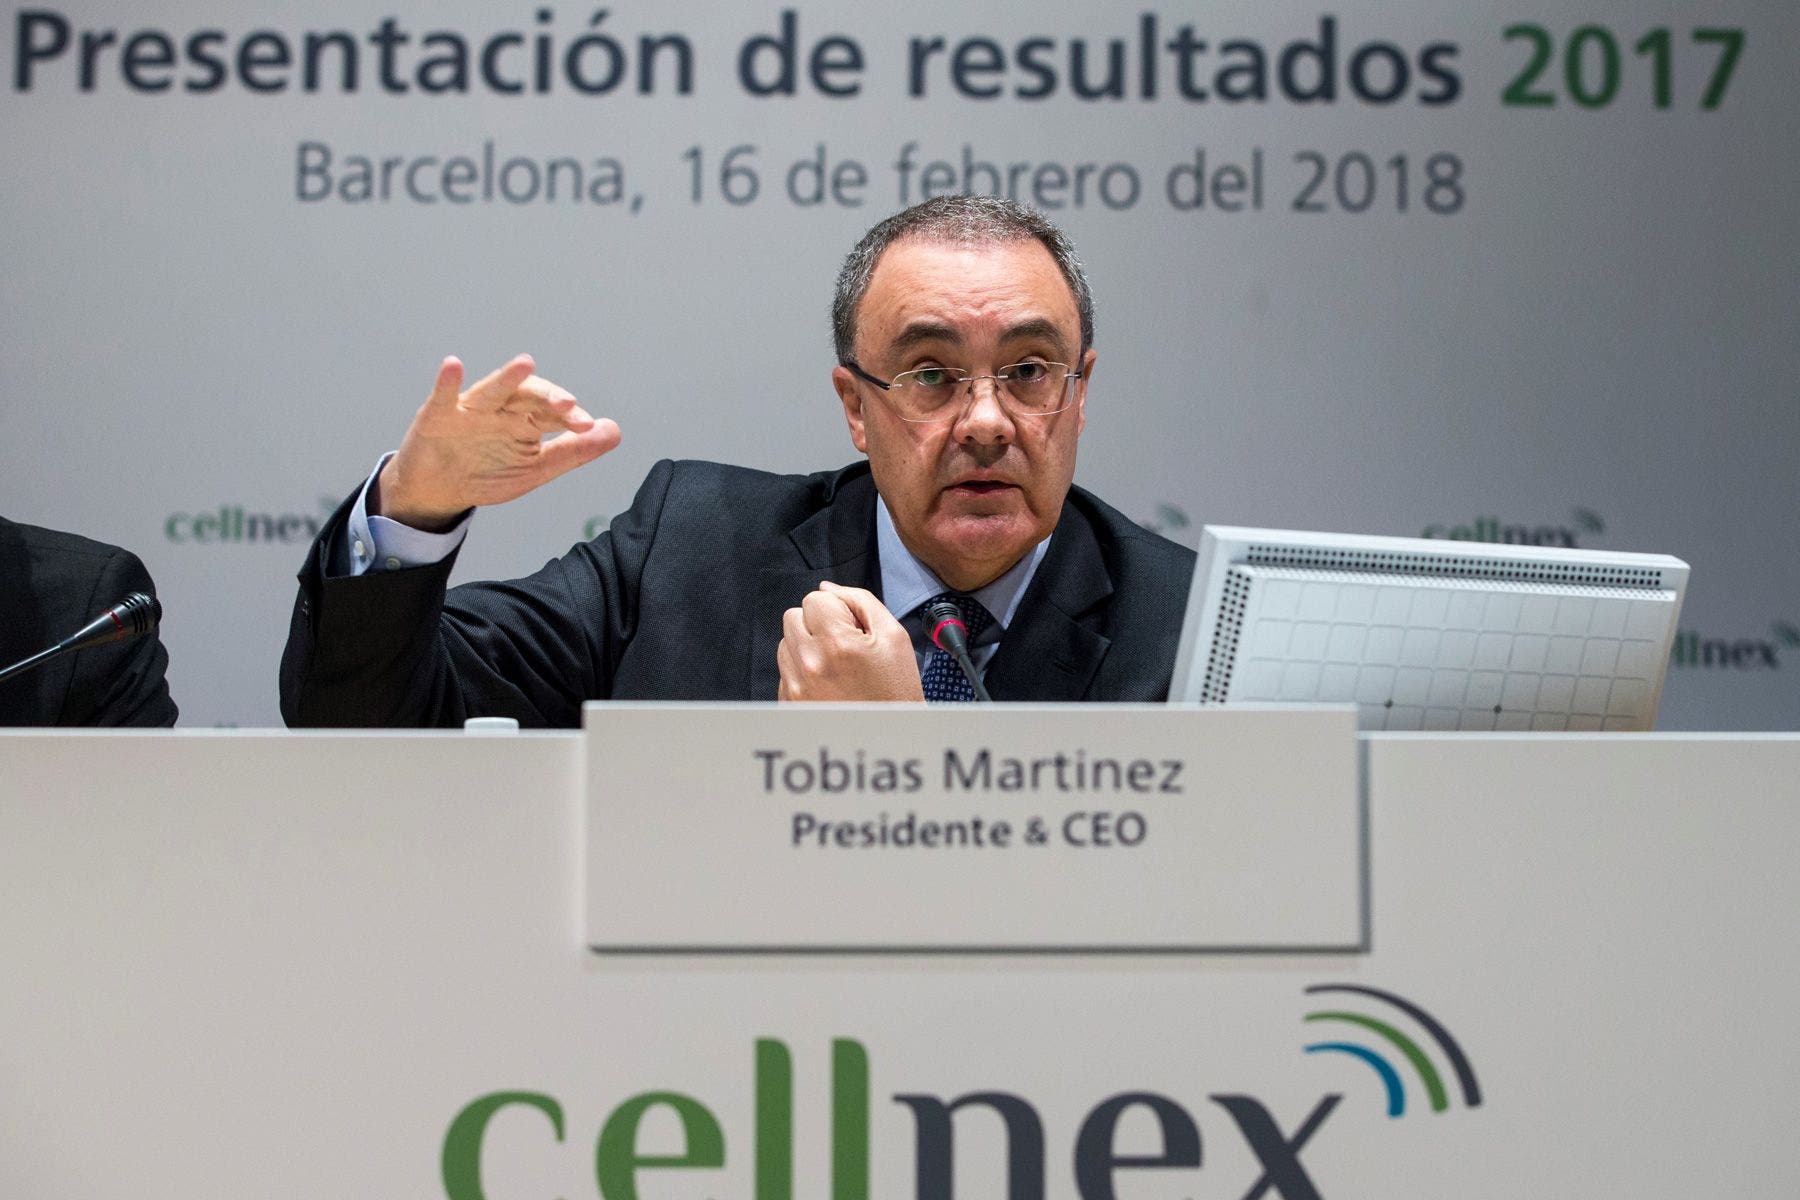 Cellnex entered 19% more, but still lost $91 million